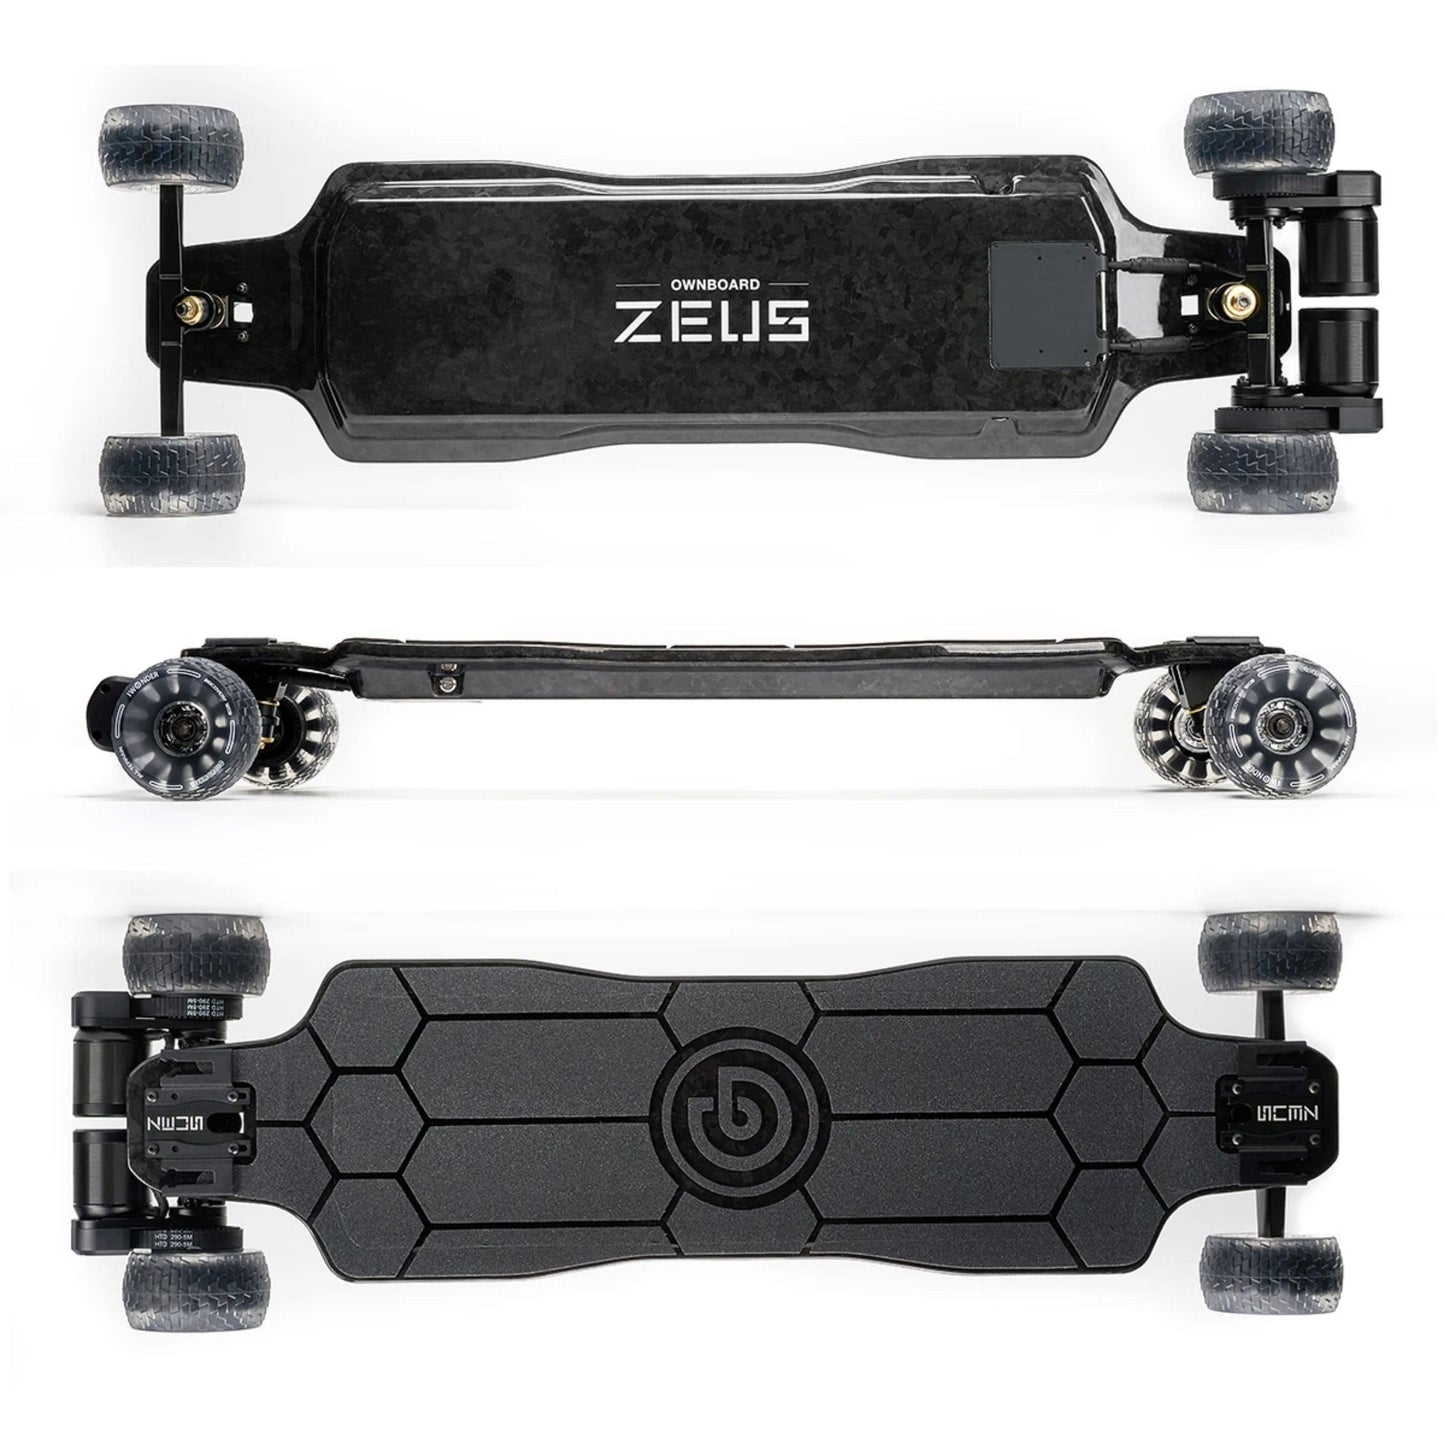 Ownboard Zeus Carbon Electric Skateboard